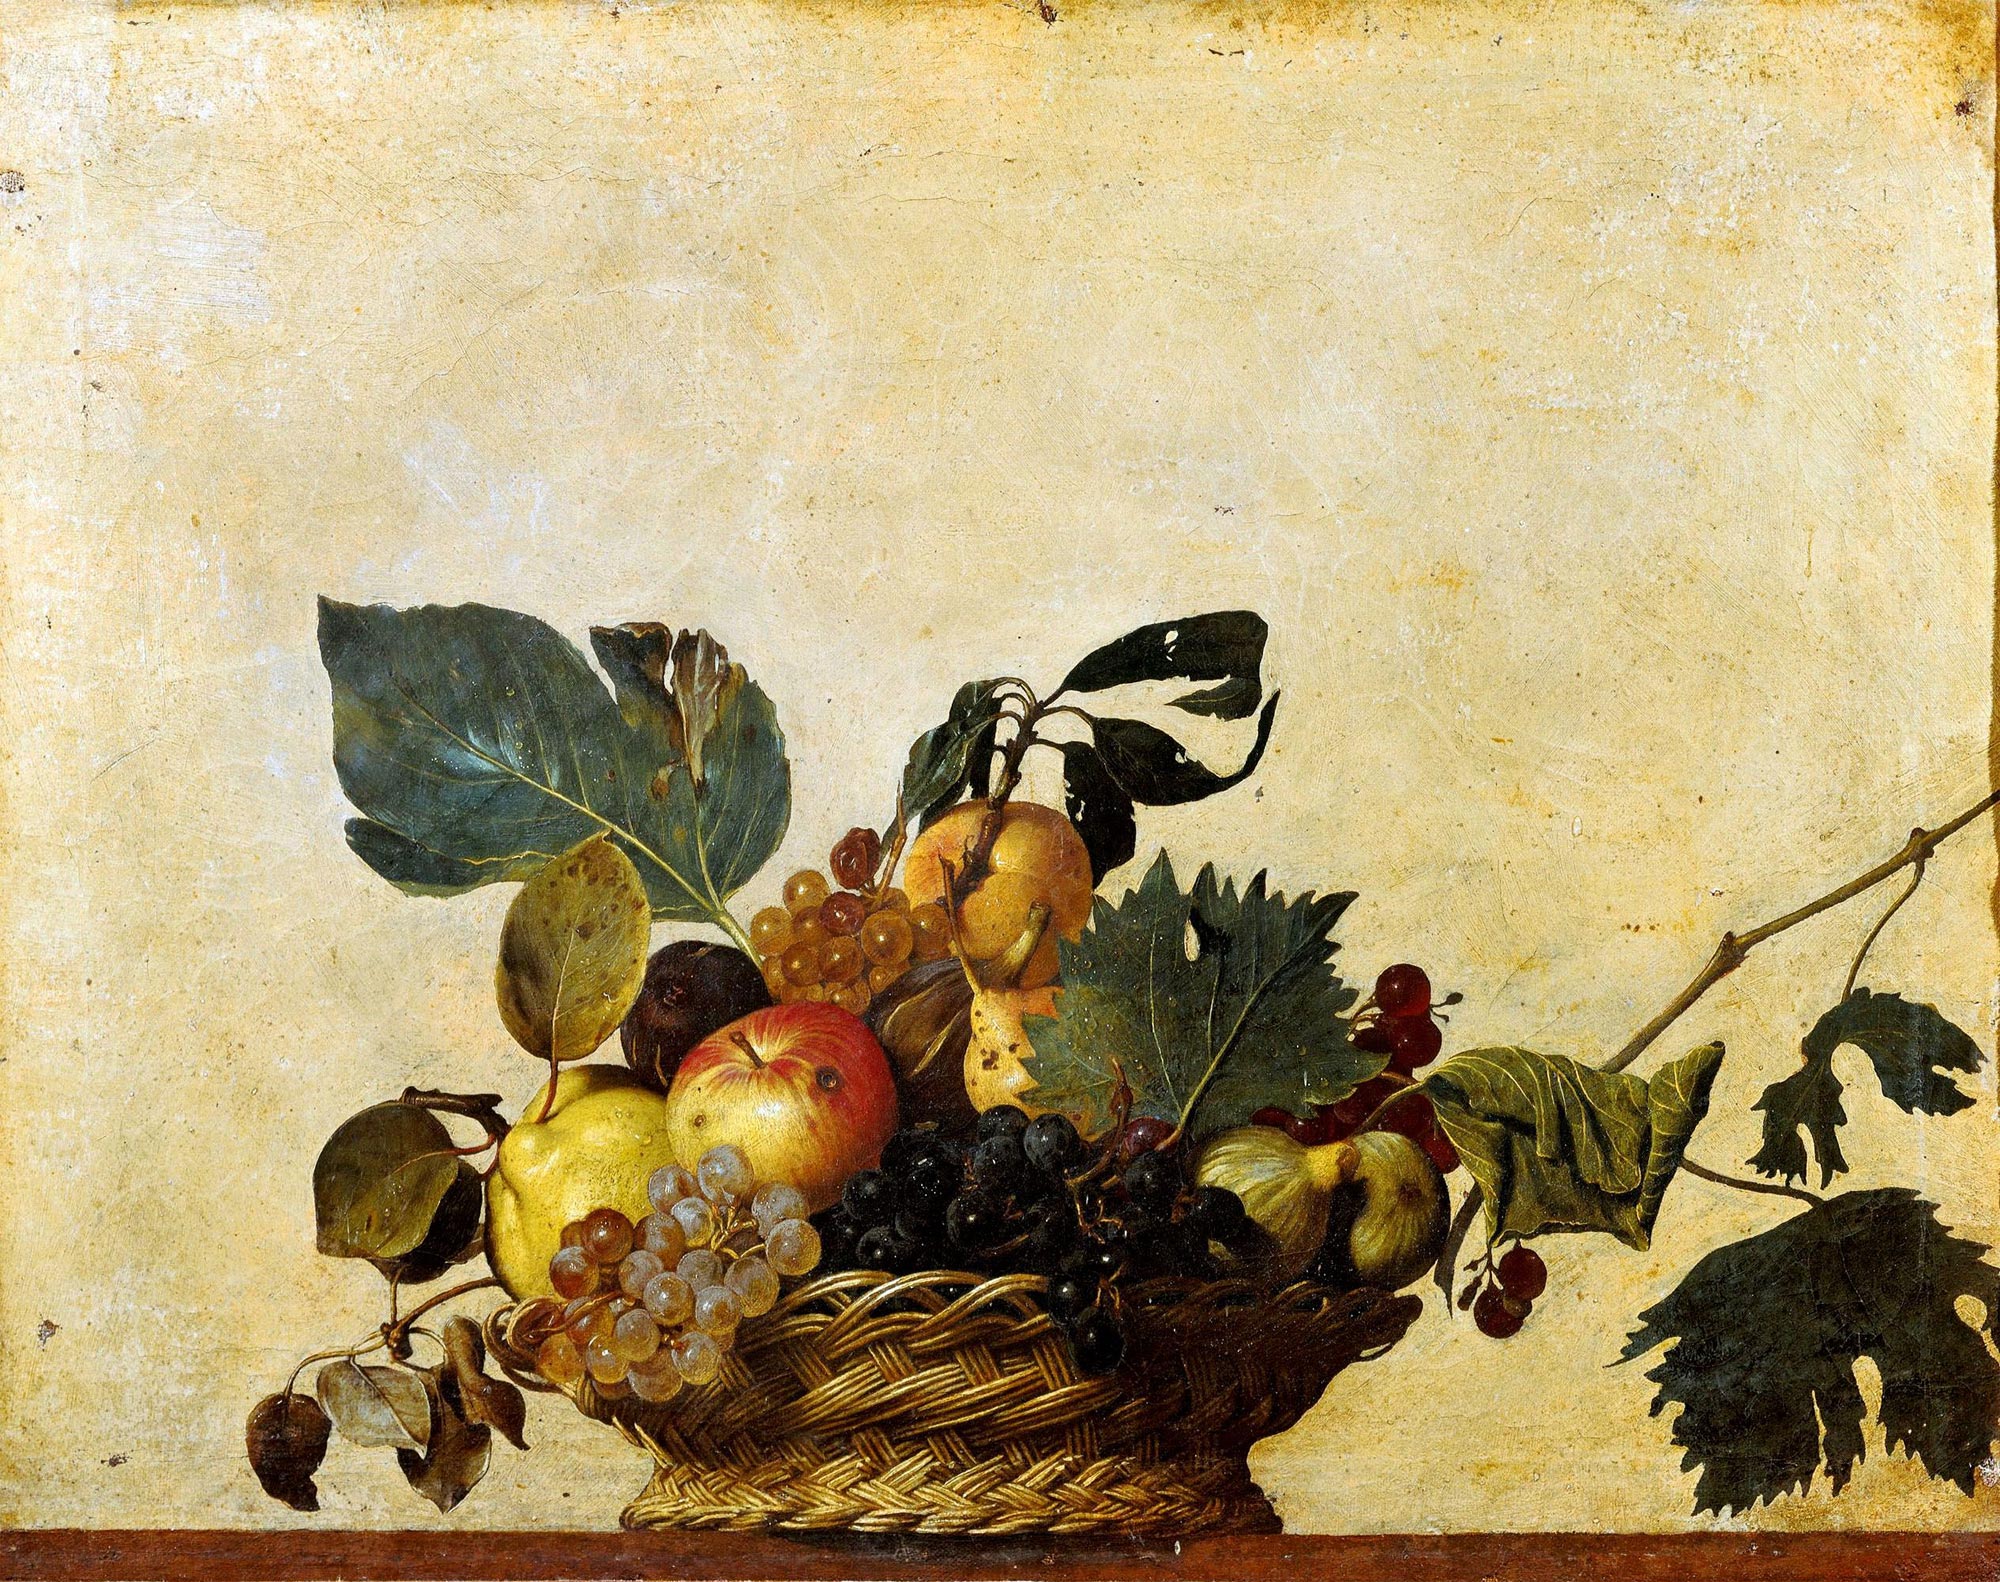 Caravaggio, Basket of Fruit (1594-1598; oil on canvas, 31 x 47 cm; Milan, Pinacoteca Ambrosiana)